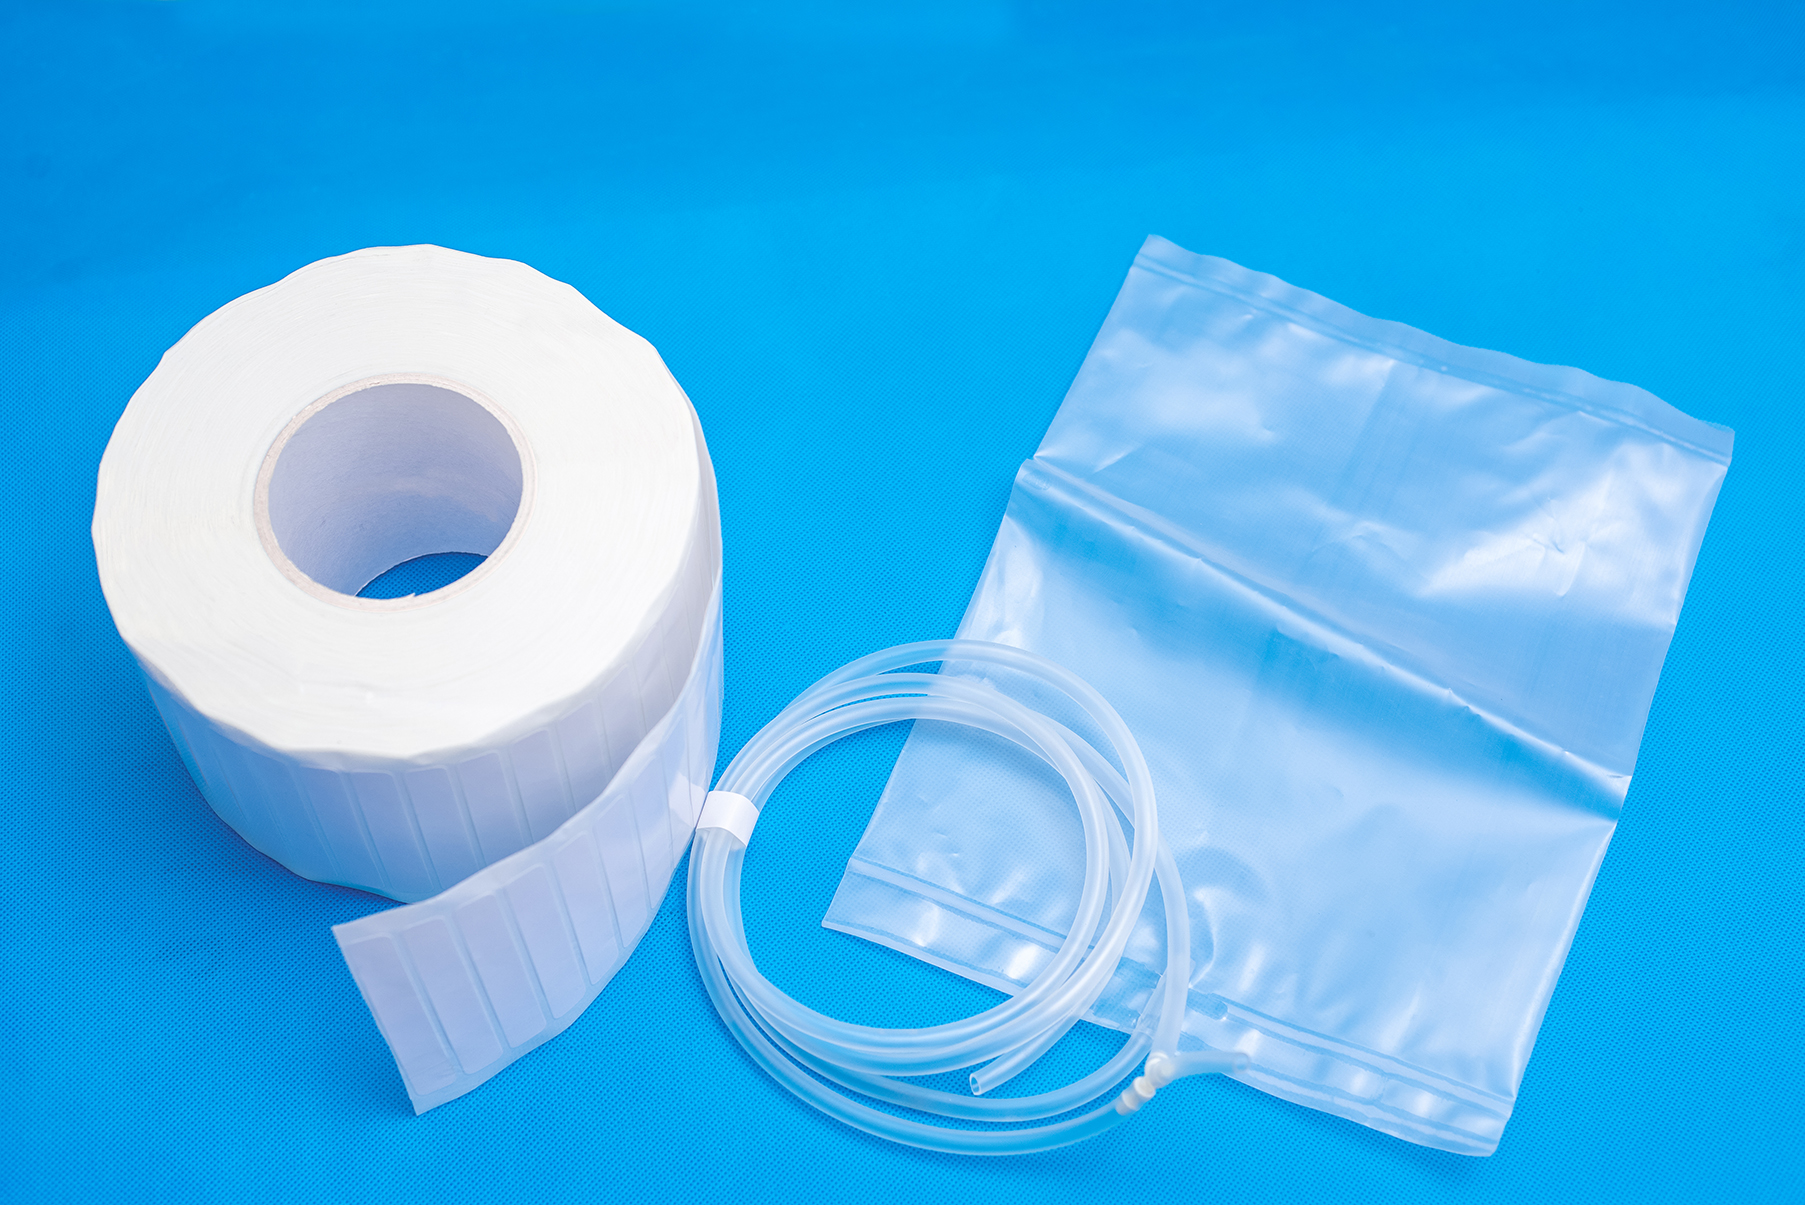 Catheter fixed - adhesive tape, sticker